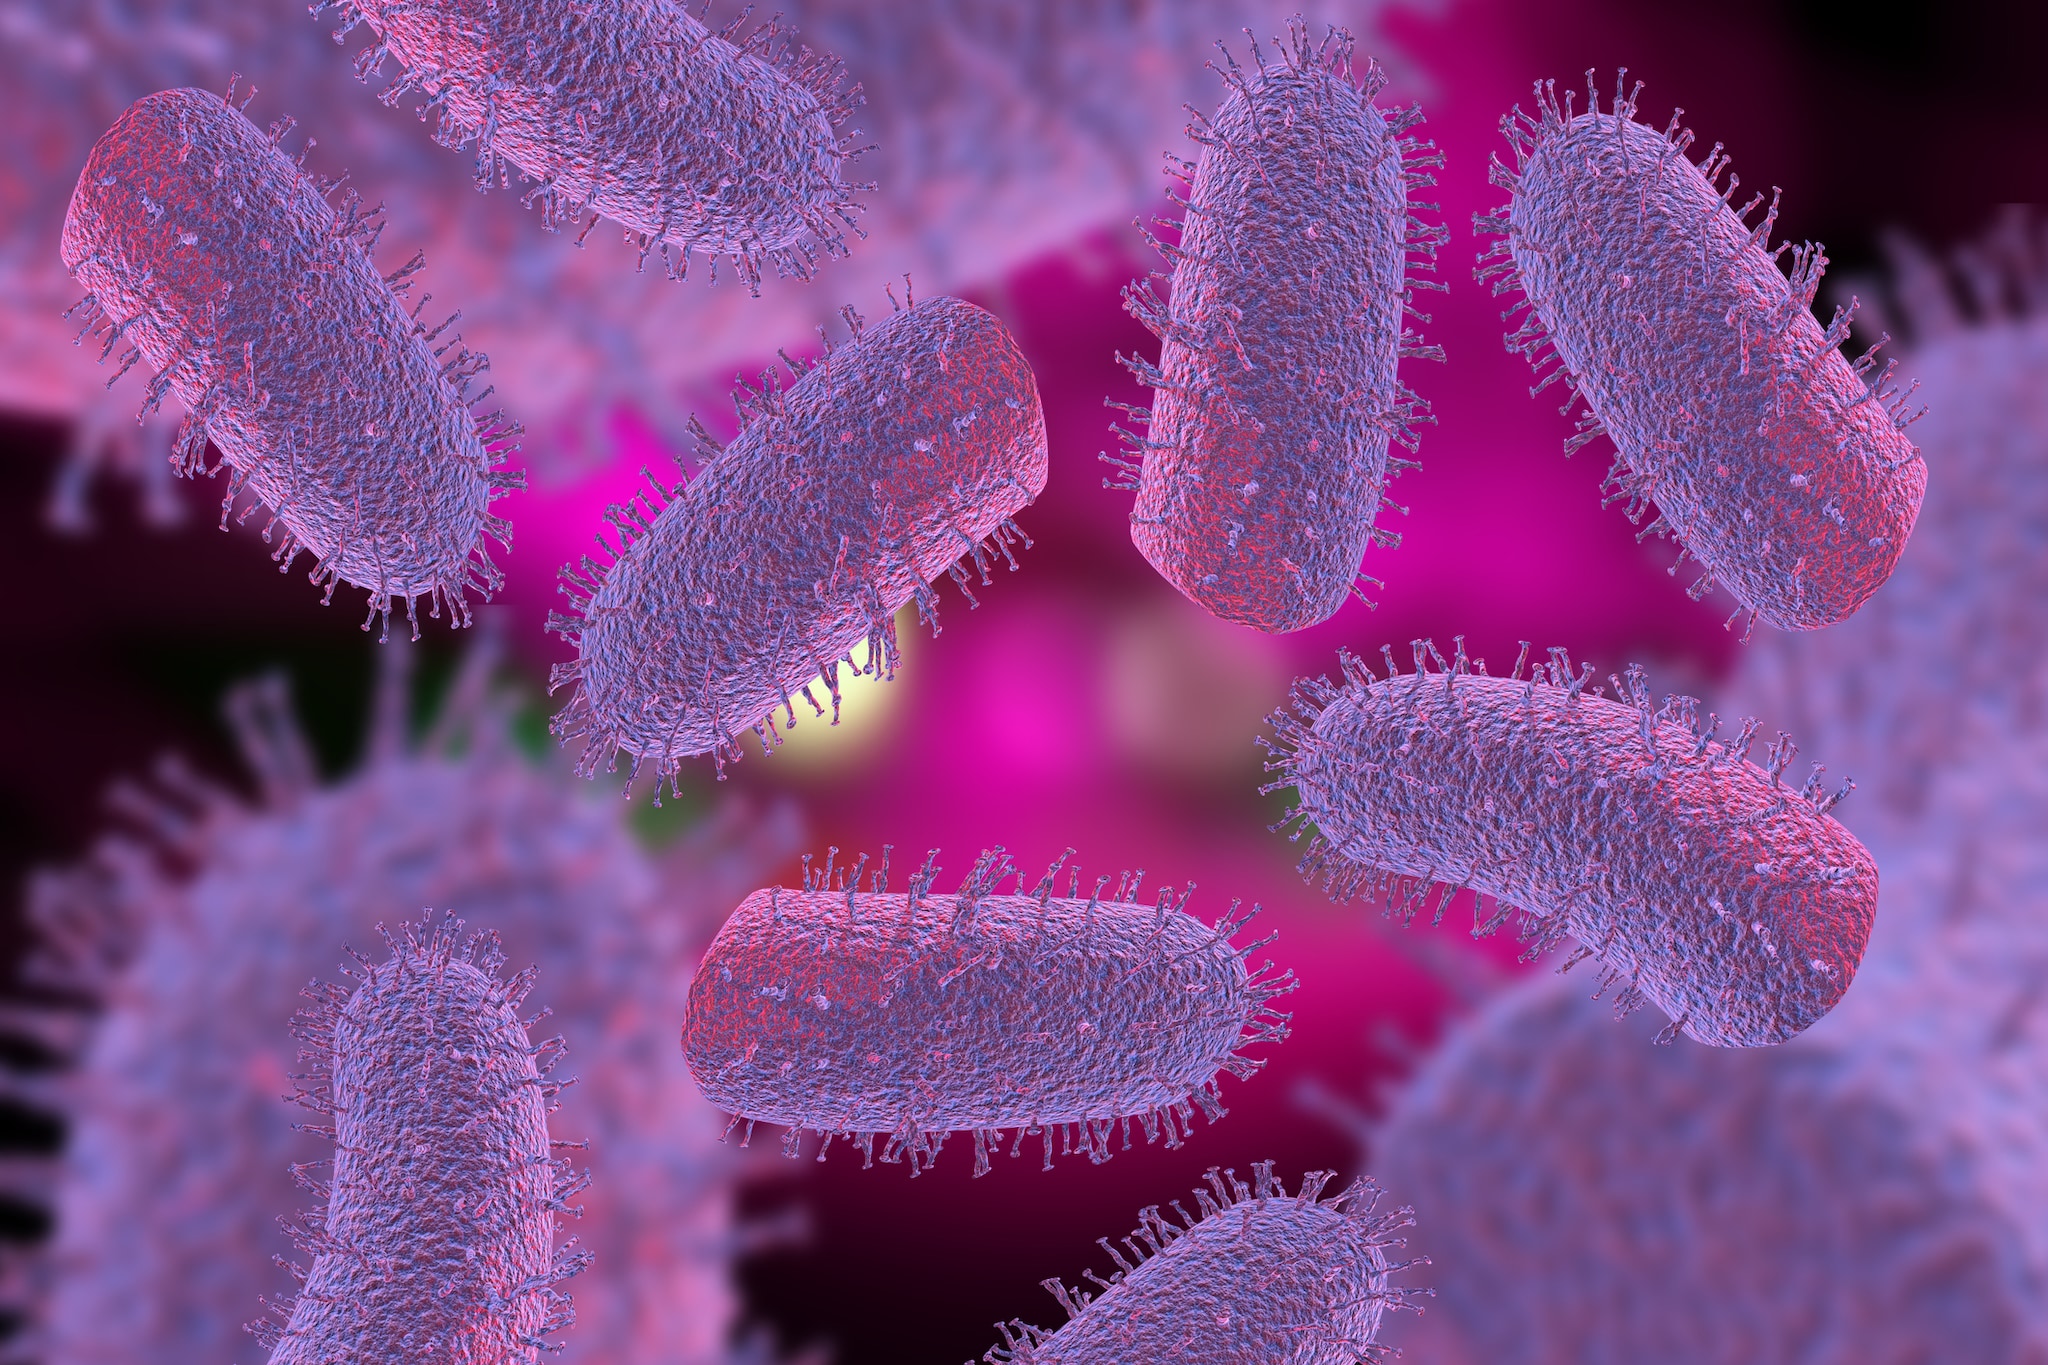 Image of Rabies virus microscopy image